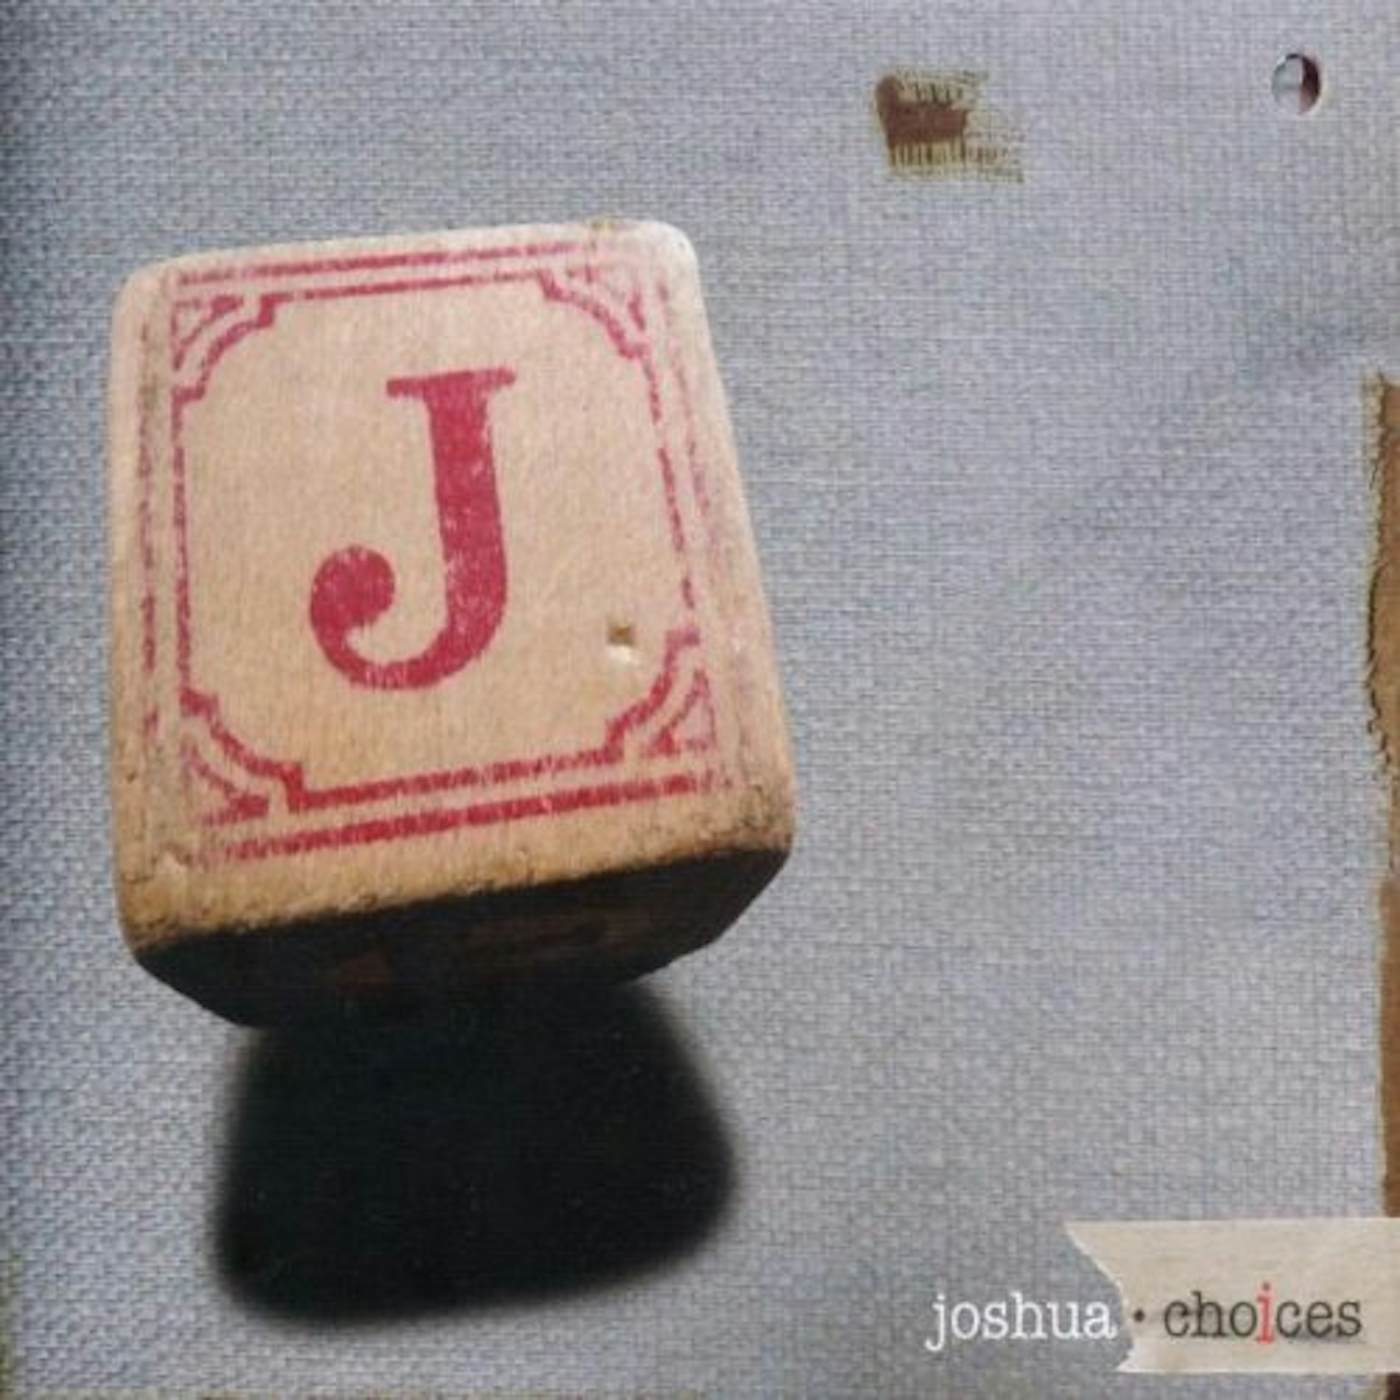 Joshua Choices Vinyl Record